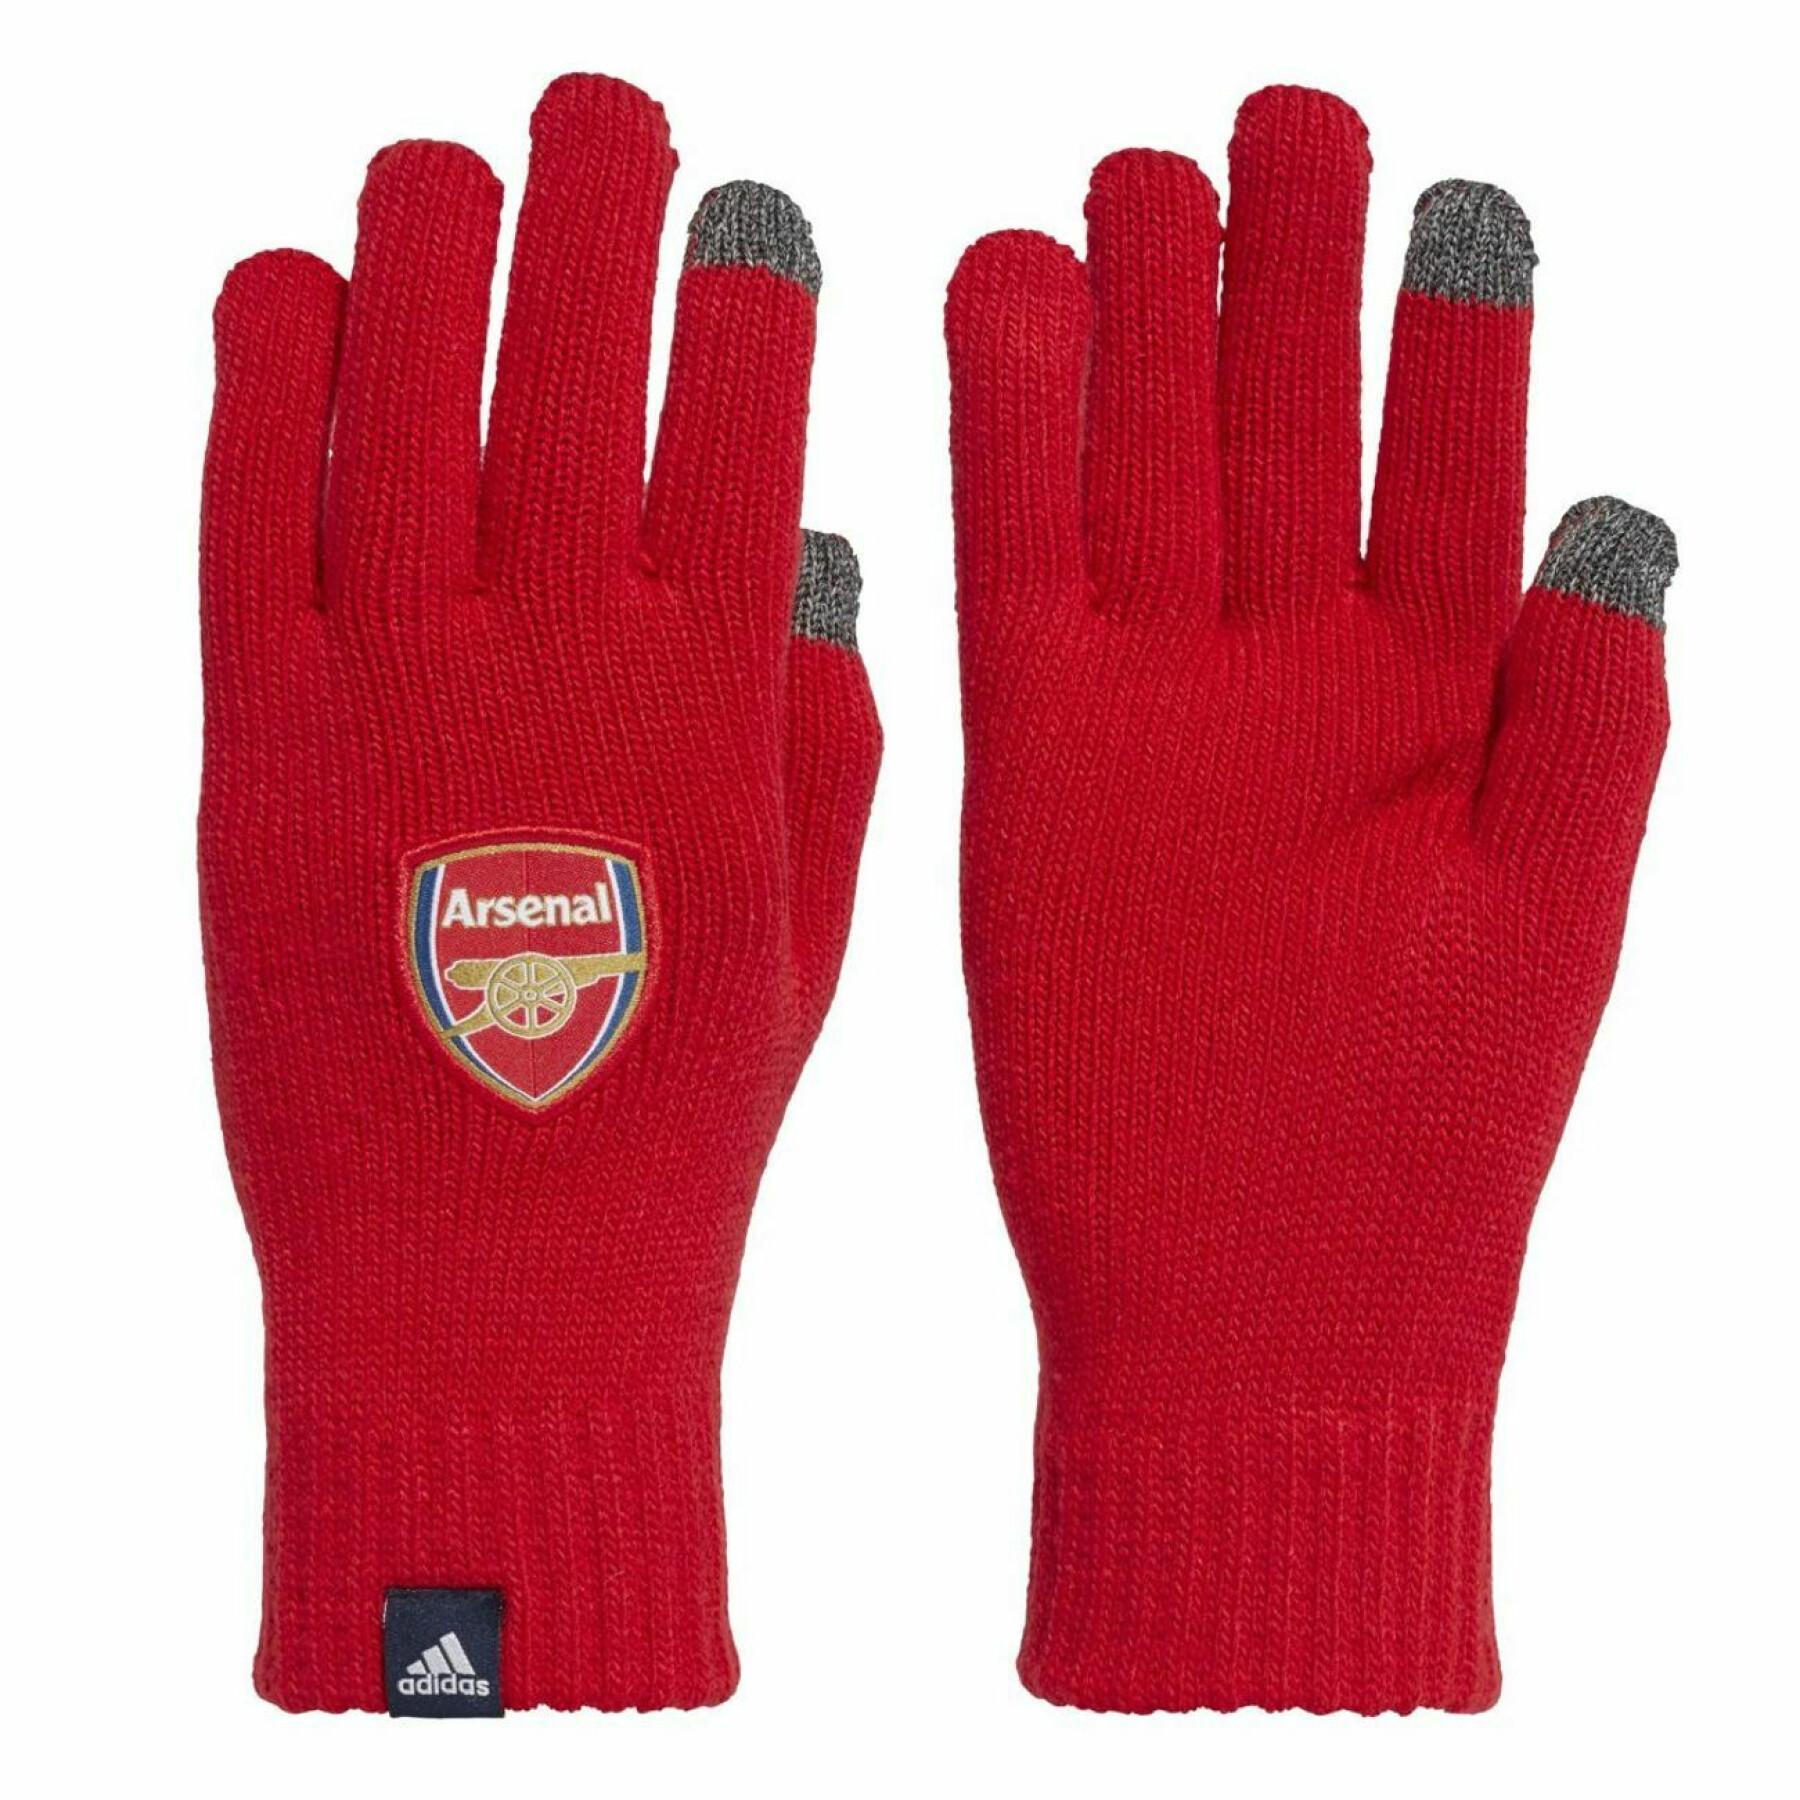 Handschuhe Arsenal